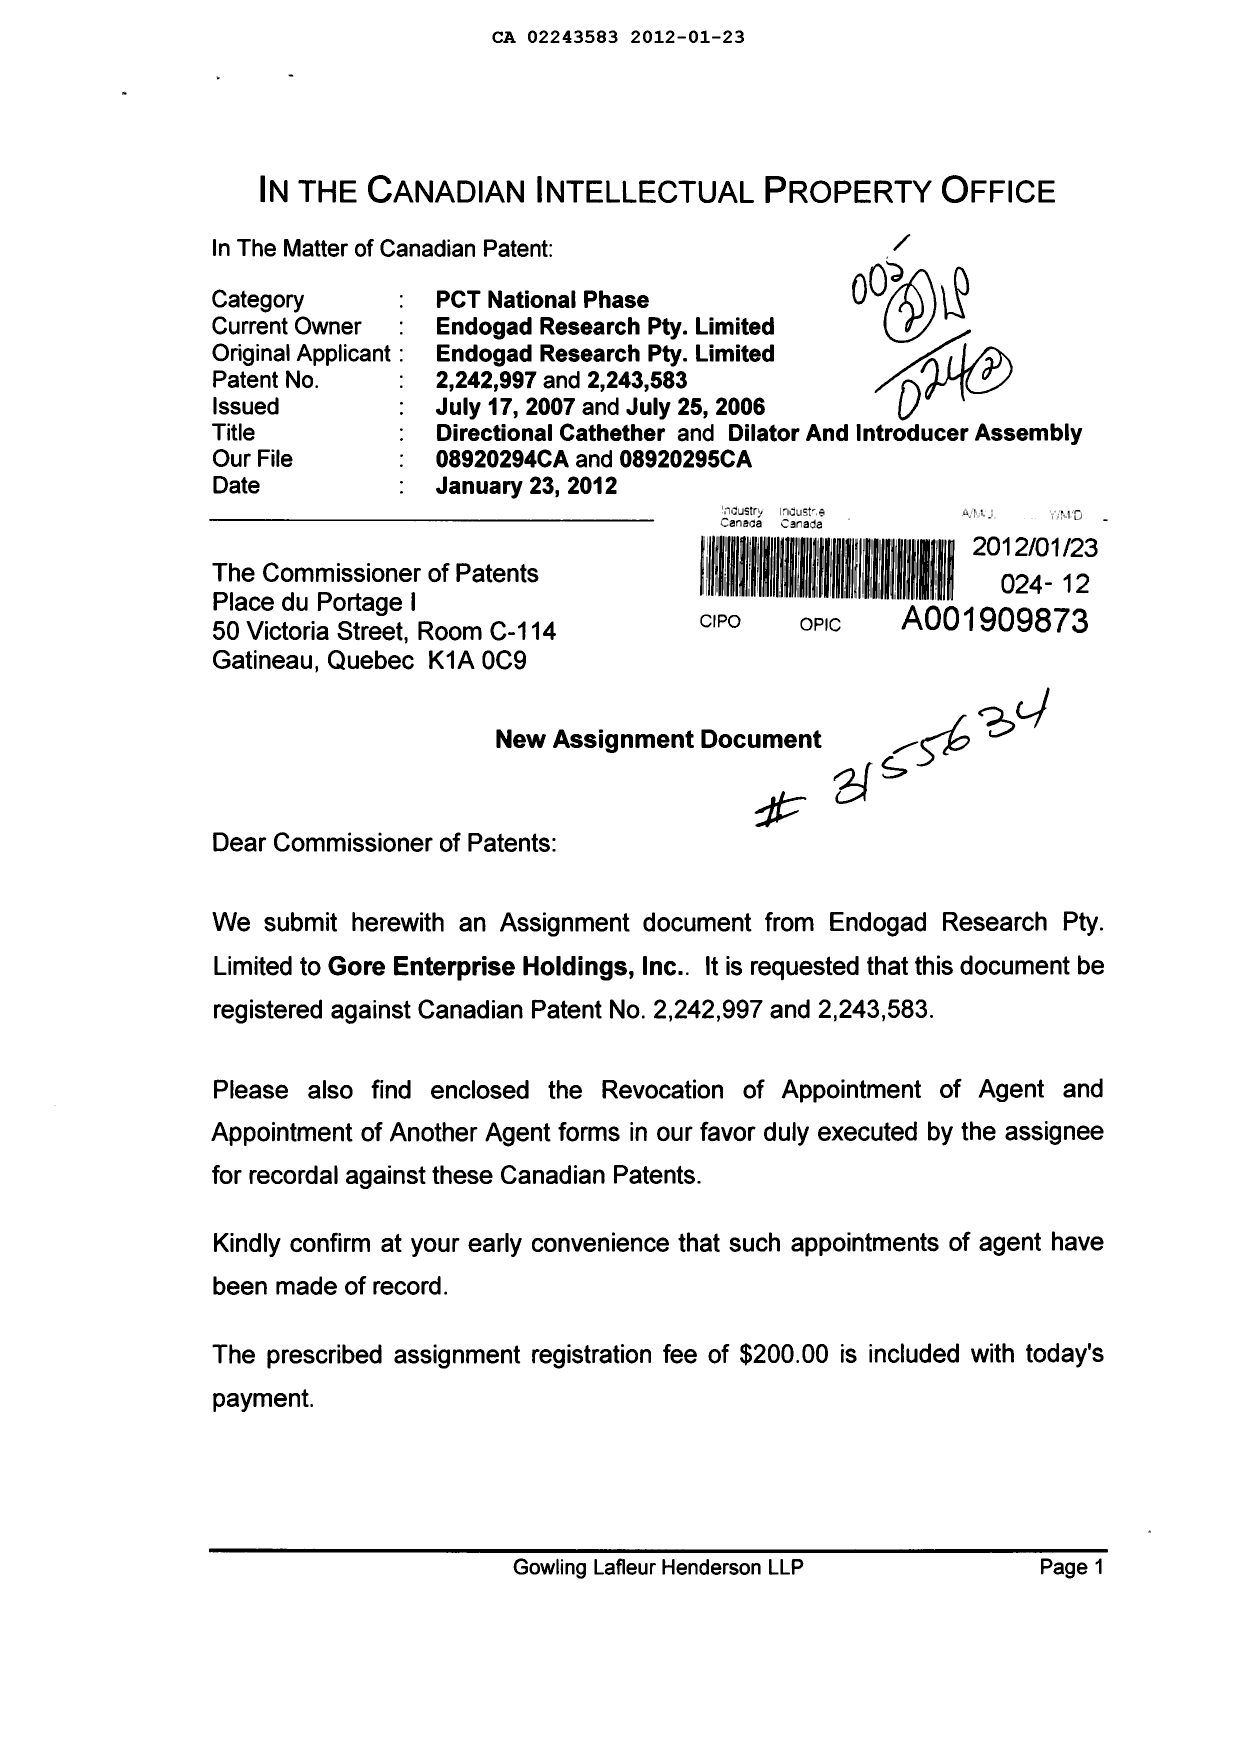 Canadian Patent Document 2243583. Correspondence 20120123. Image 1 of 4